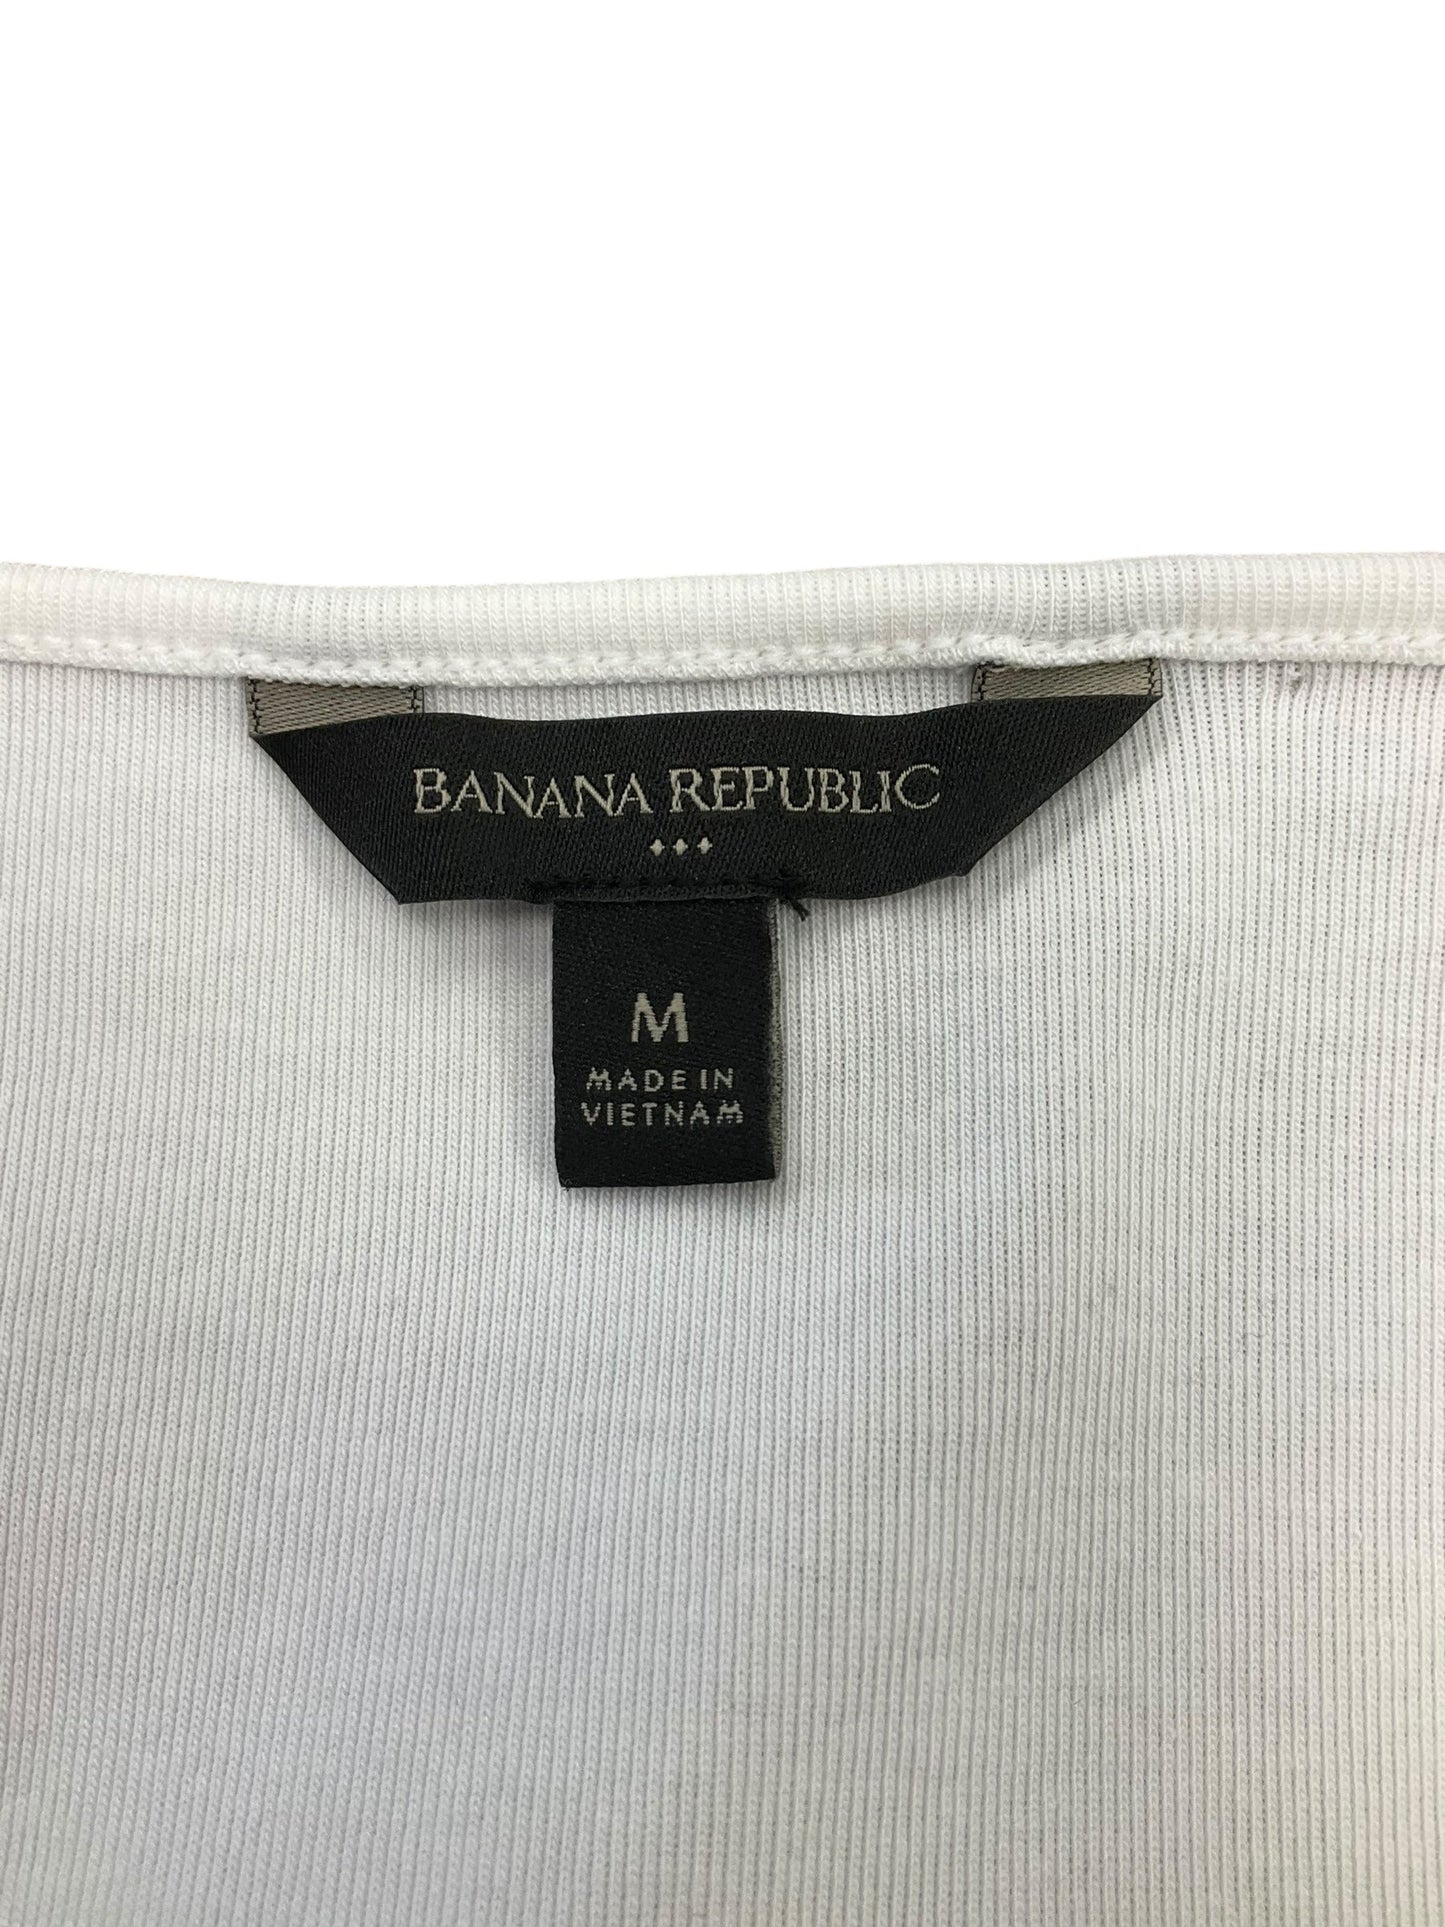 White Top Long Sleeve Basic Banana Republic, Size M